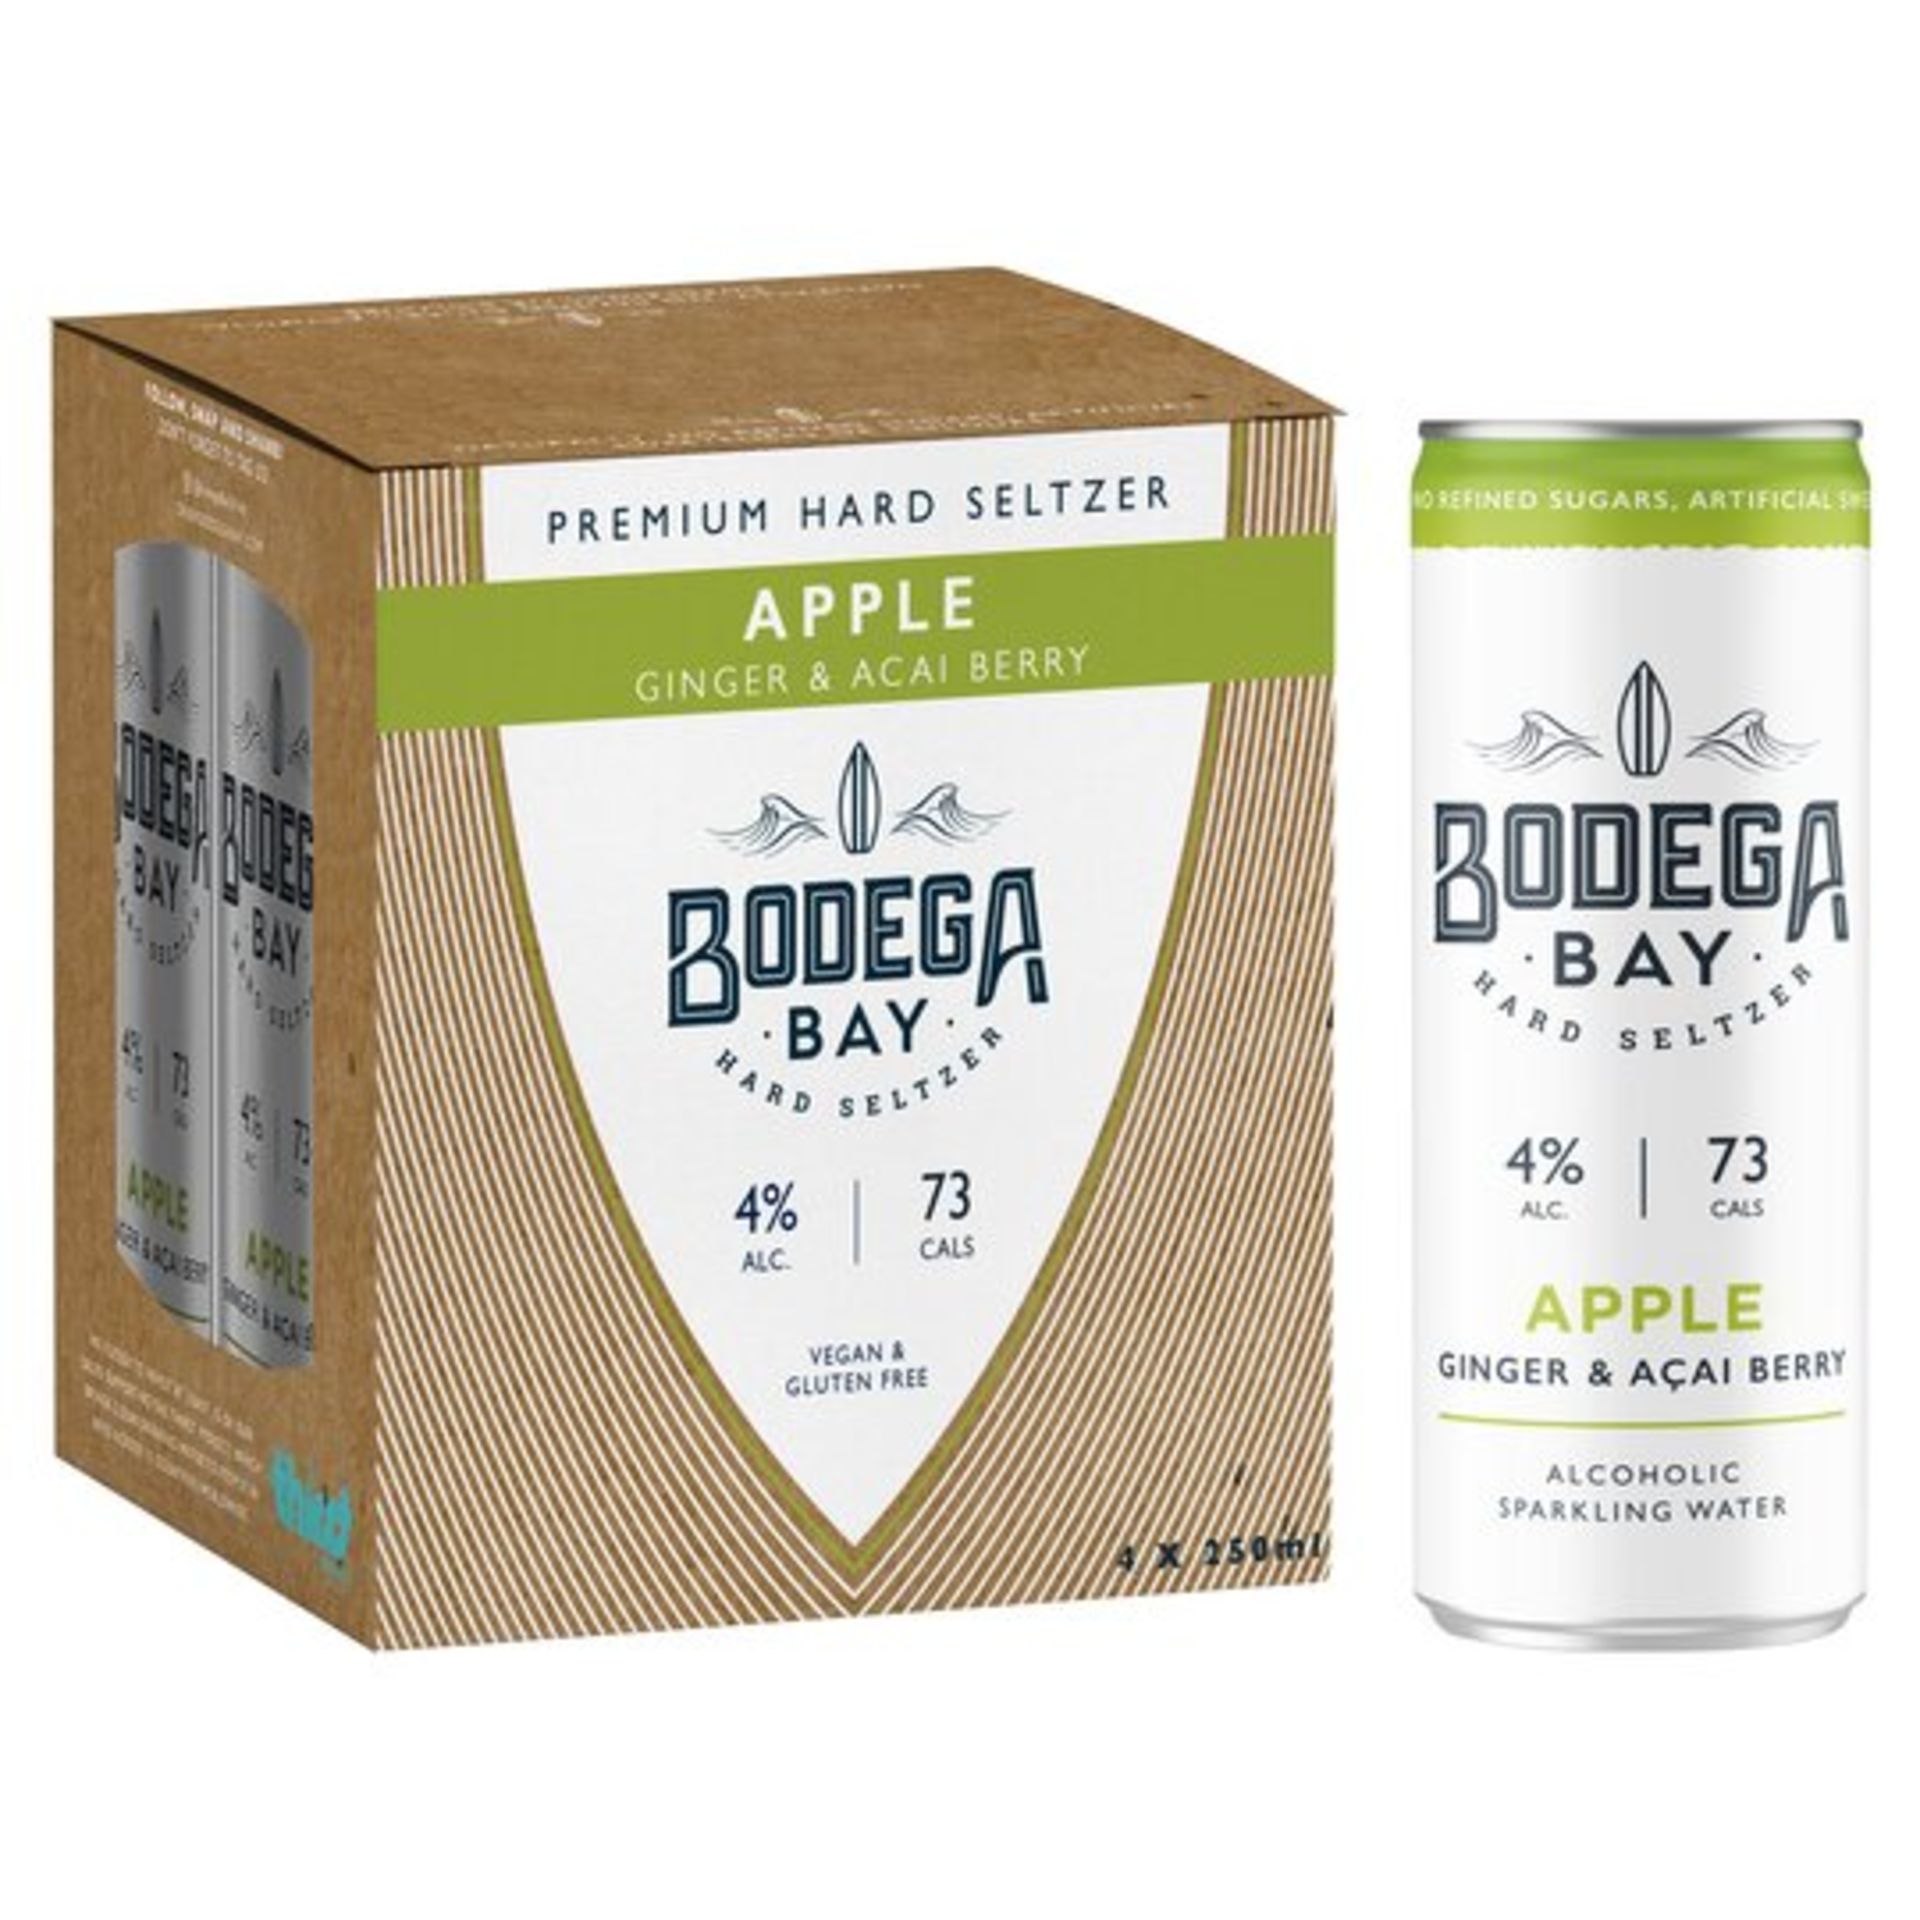 24 x Bodega Bay Hard Seltzer 250ml Alcoholic Sparkling Water Drinks - Apple Ginger & Acai Berry - Image 6 of 11